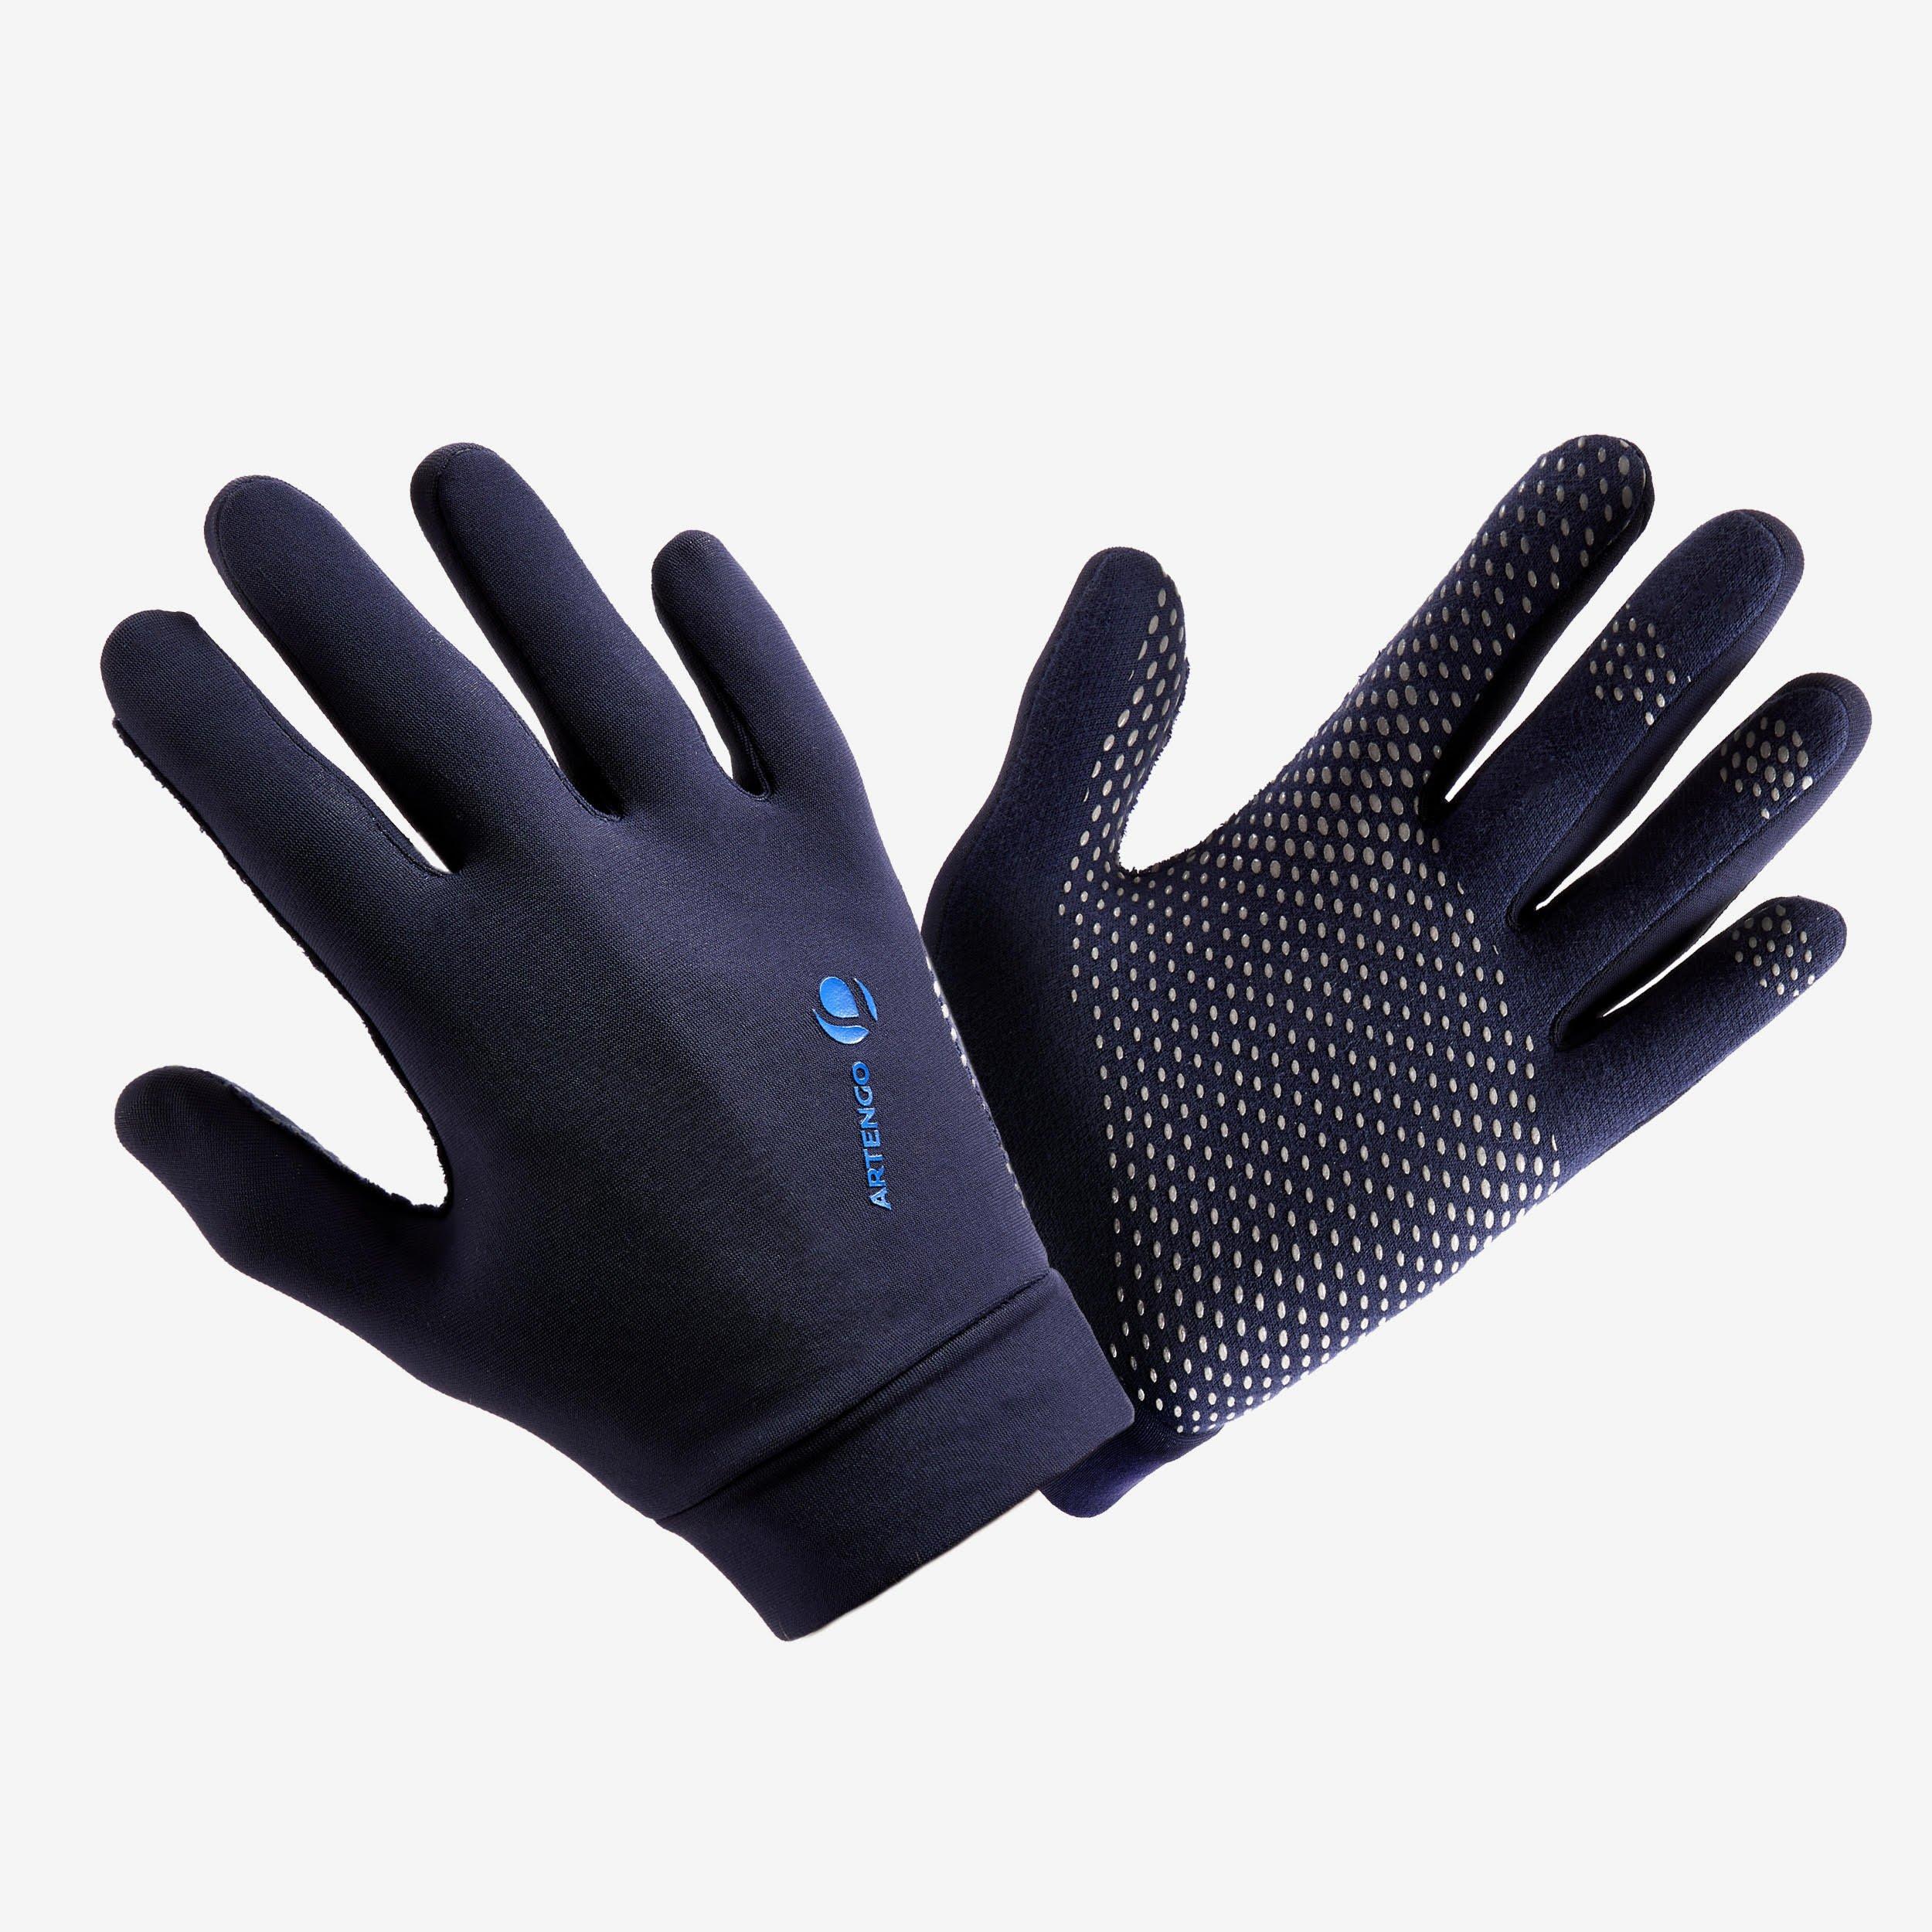 Decathlon Thermal Tennis Glove